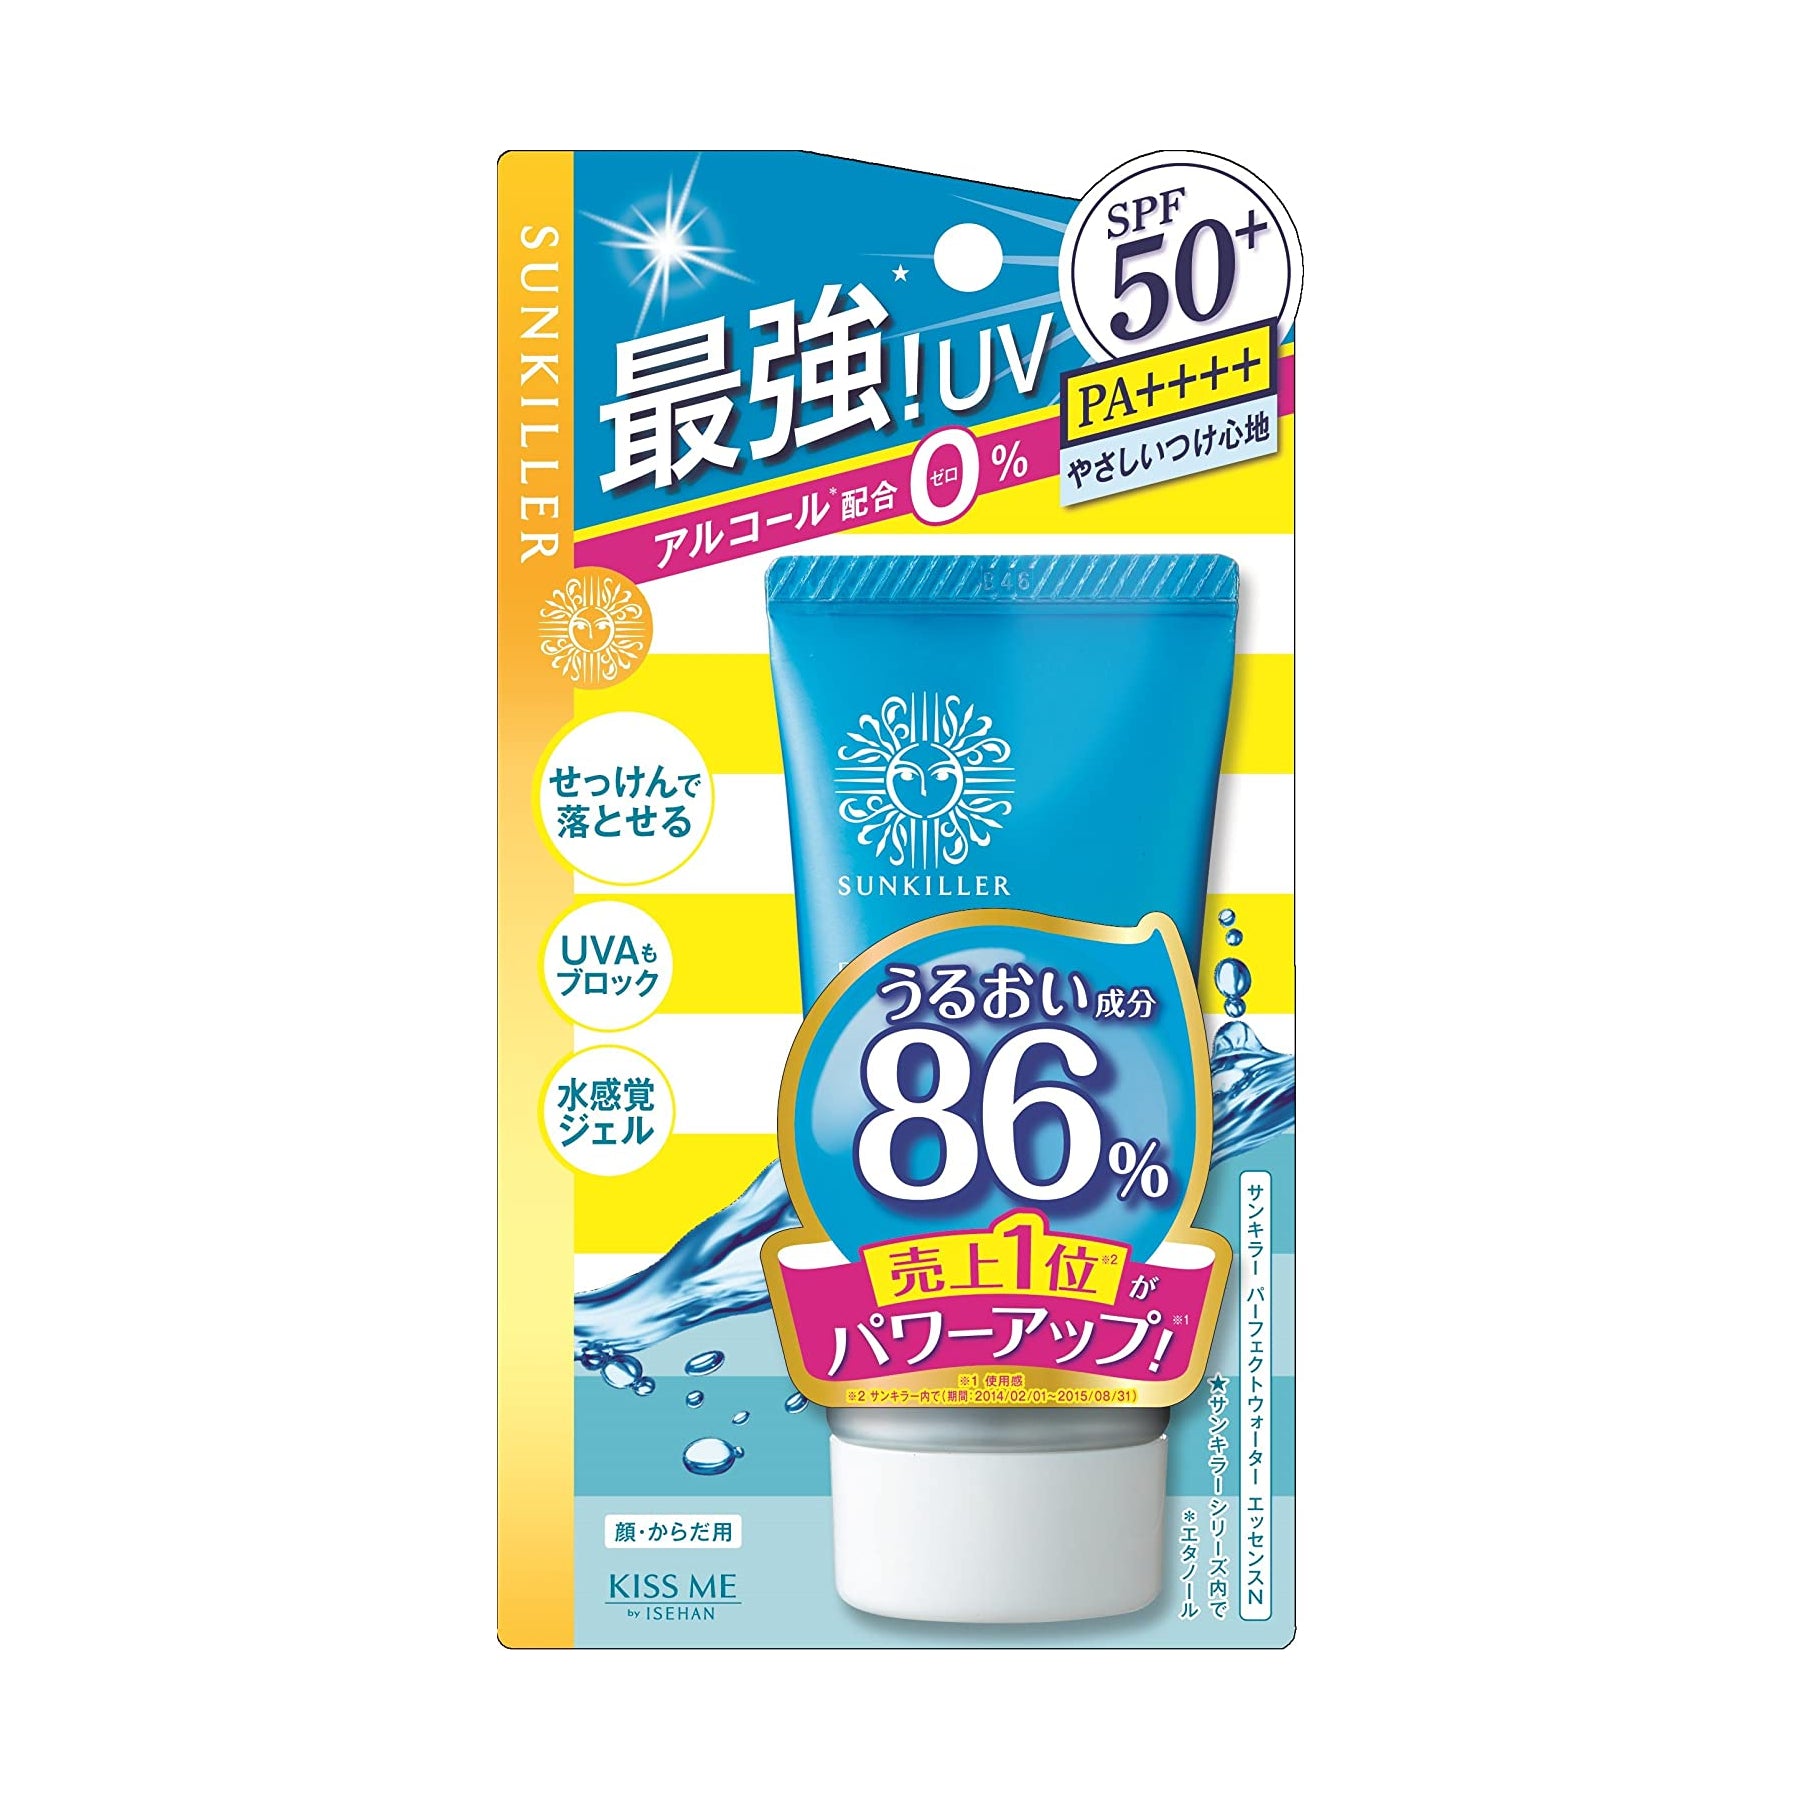 Isehan Sunkiller Perfect Water Essence SPF50+ PA++++ 50g Beauty Isehan   